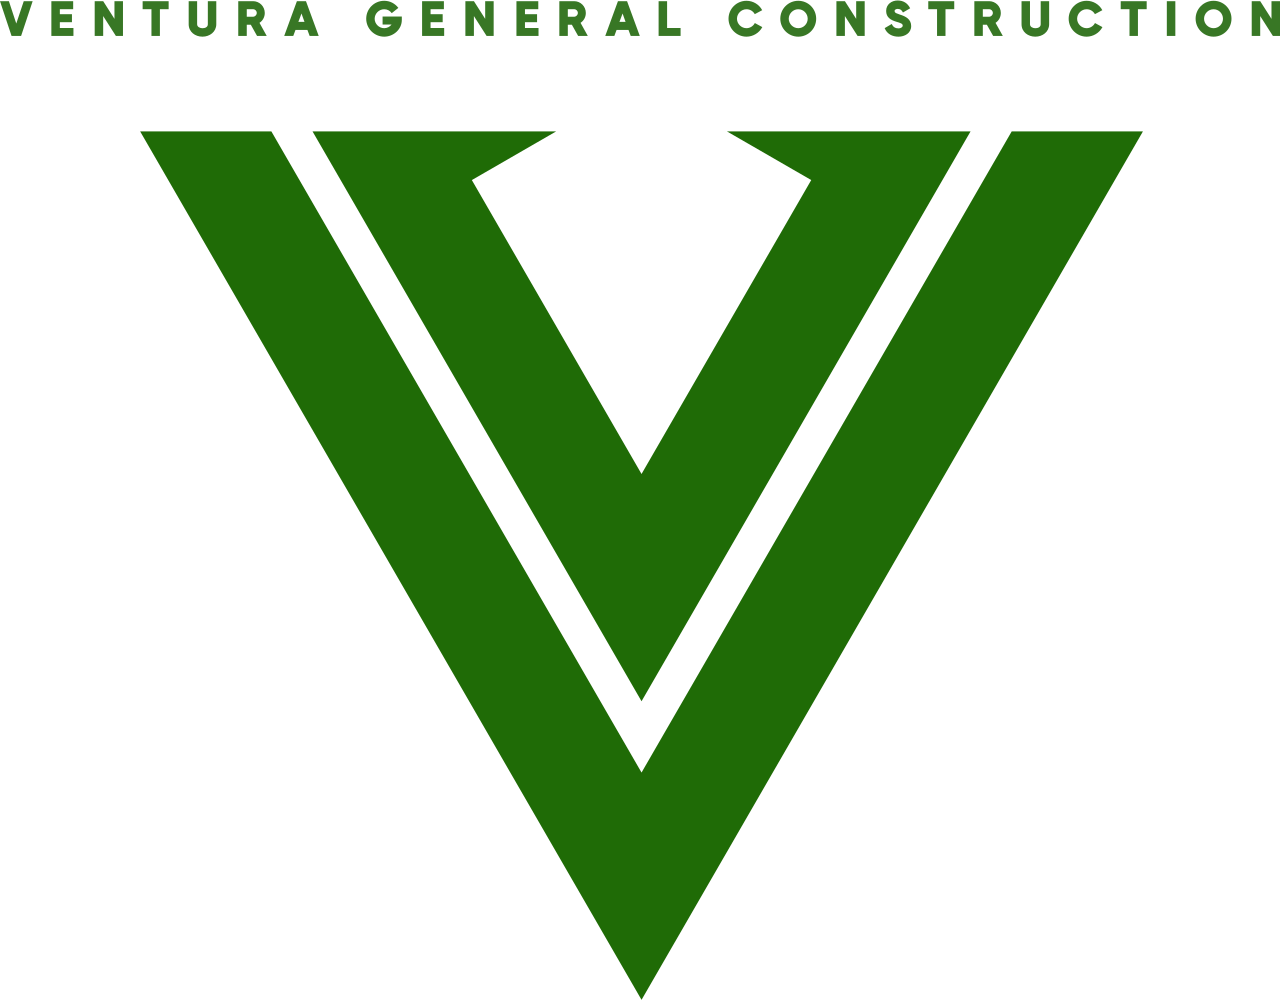 VENTURA GENERAL CONSTRUCTION's web page